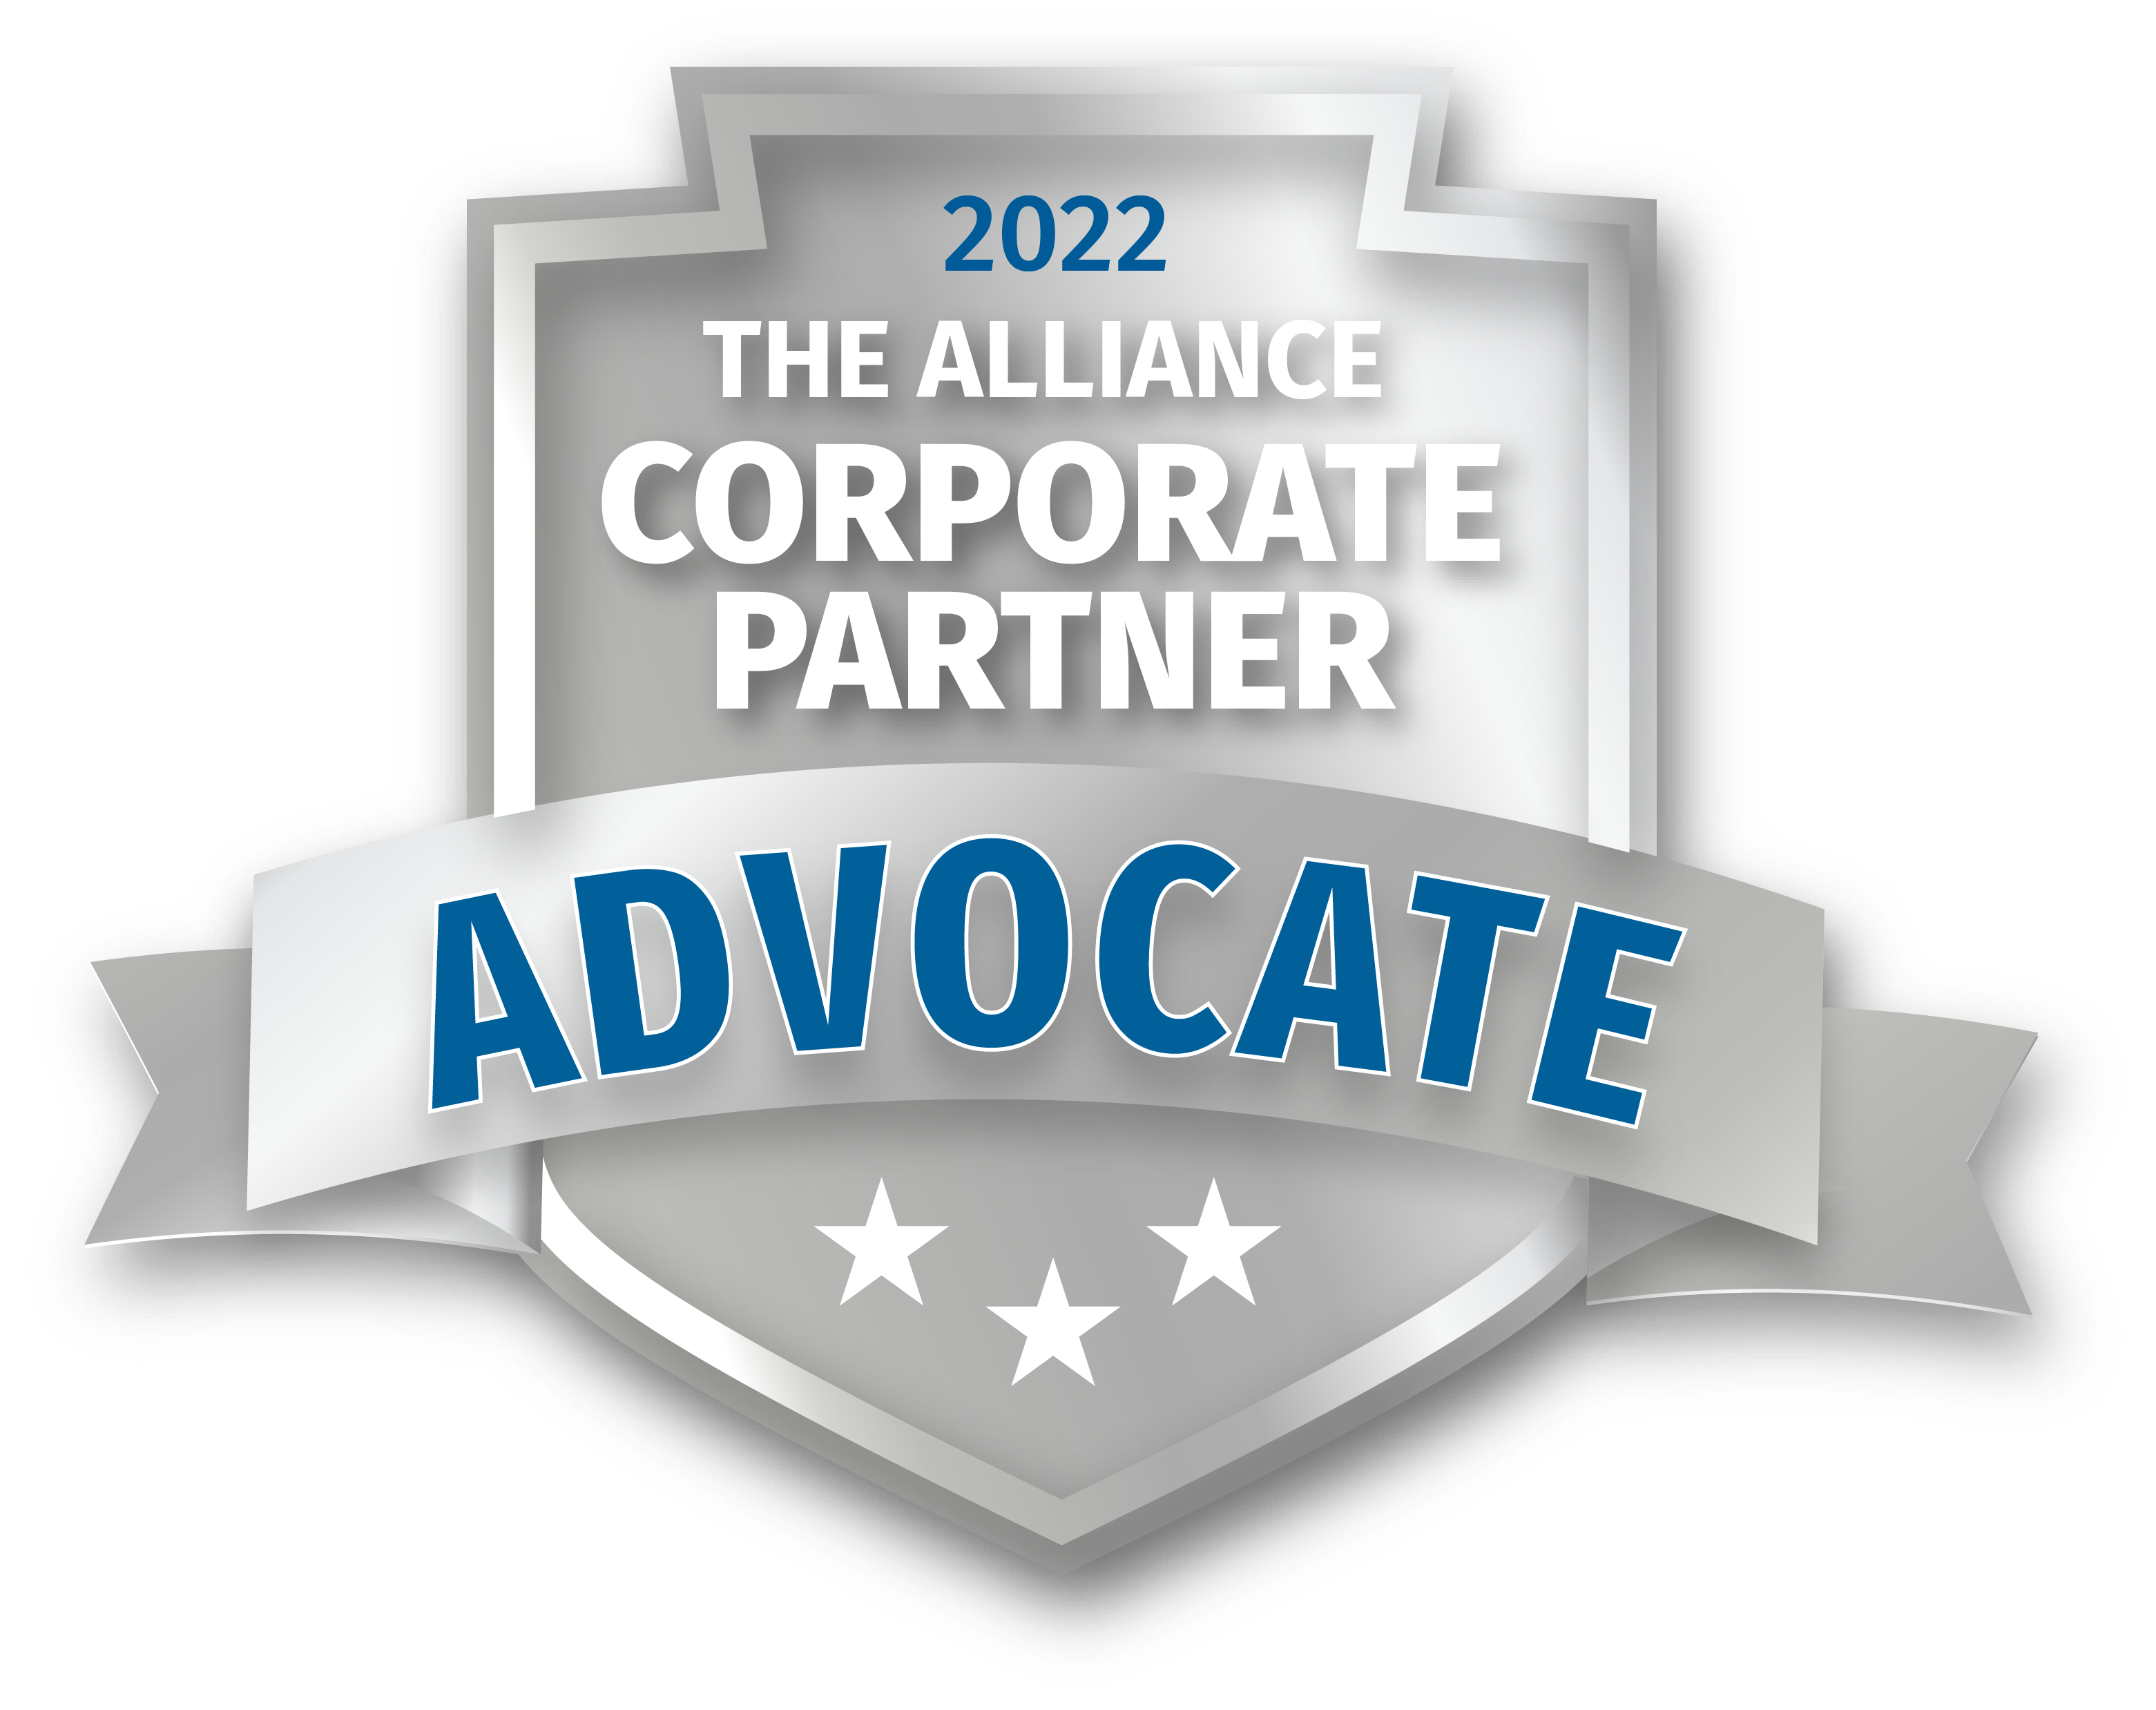 AllianceCorporatePartner Advocate 2022